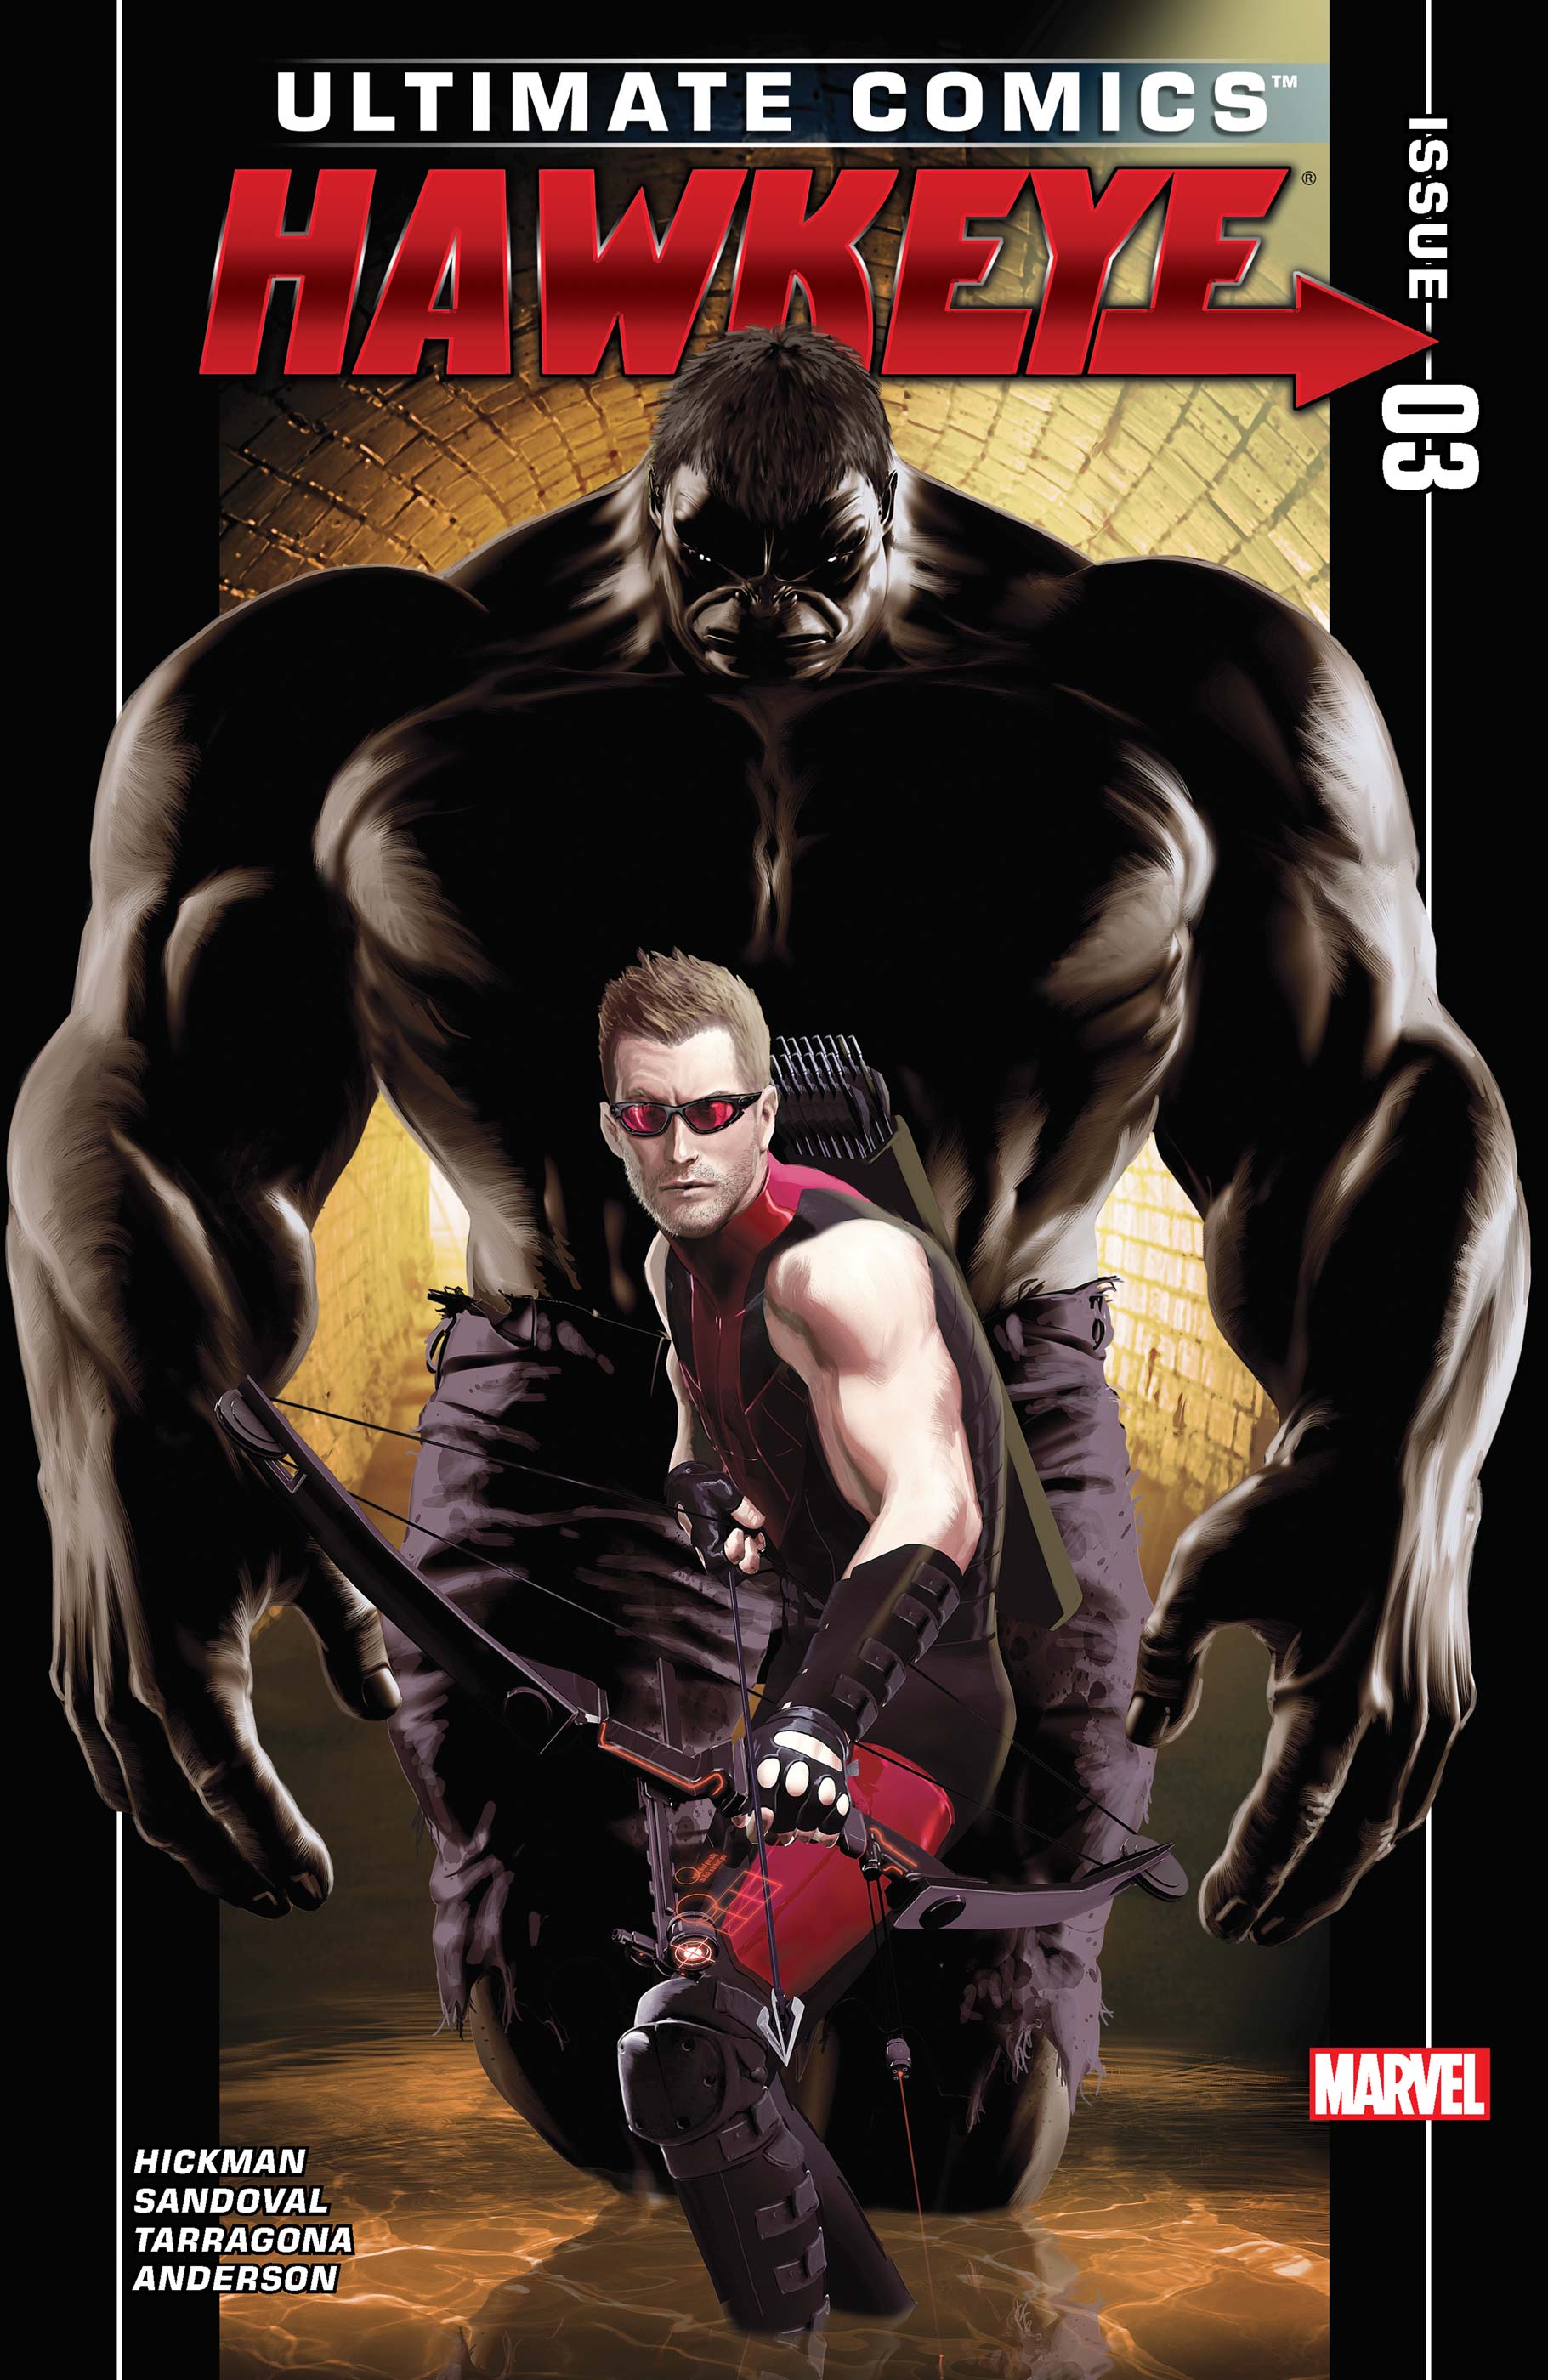 Ultimate Comics Hawkeye (2011) #3